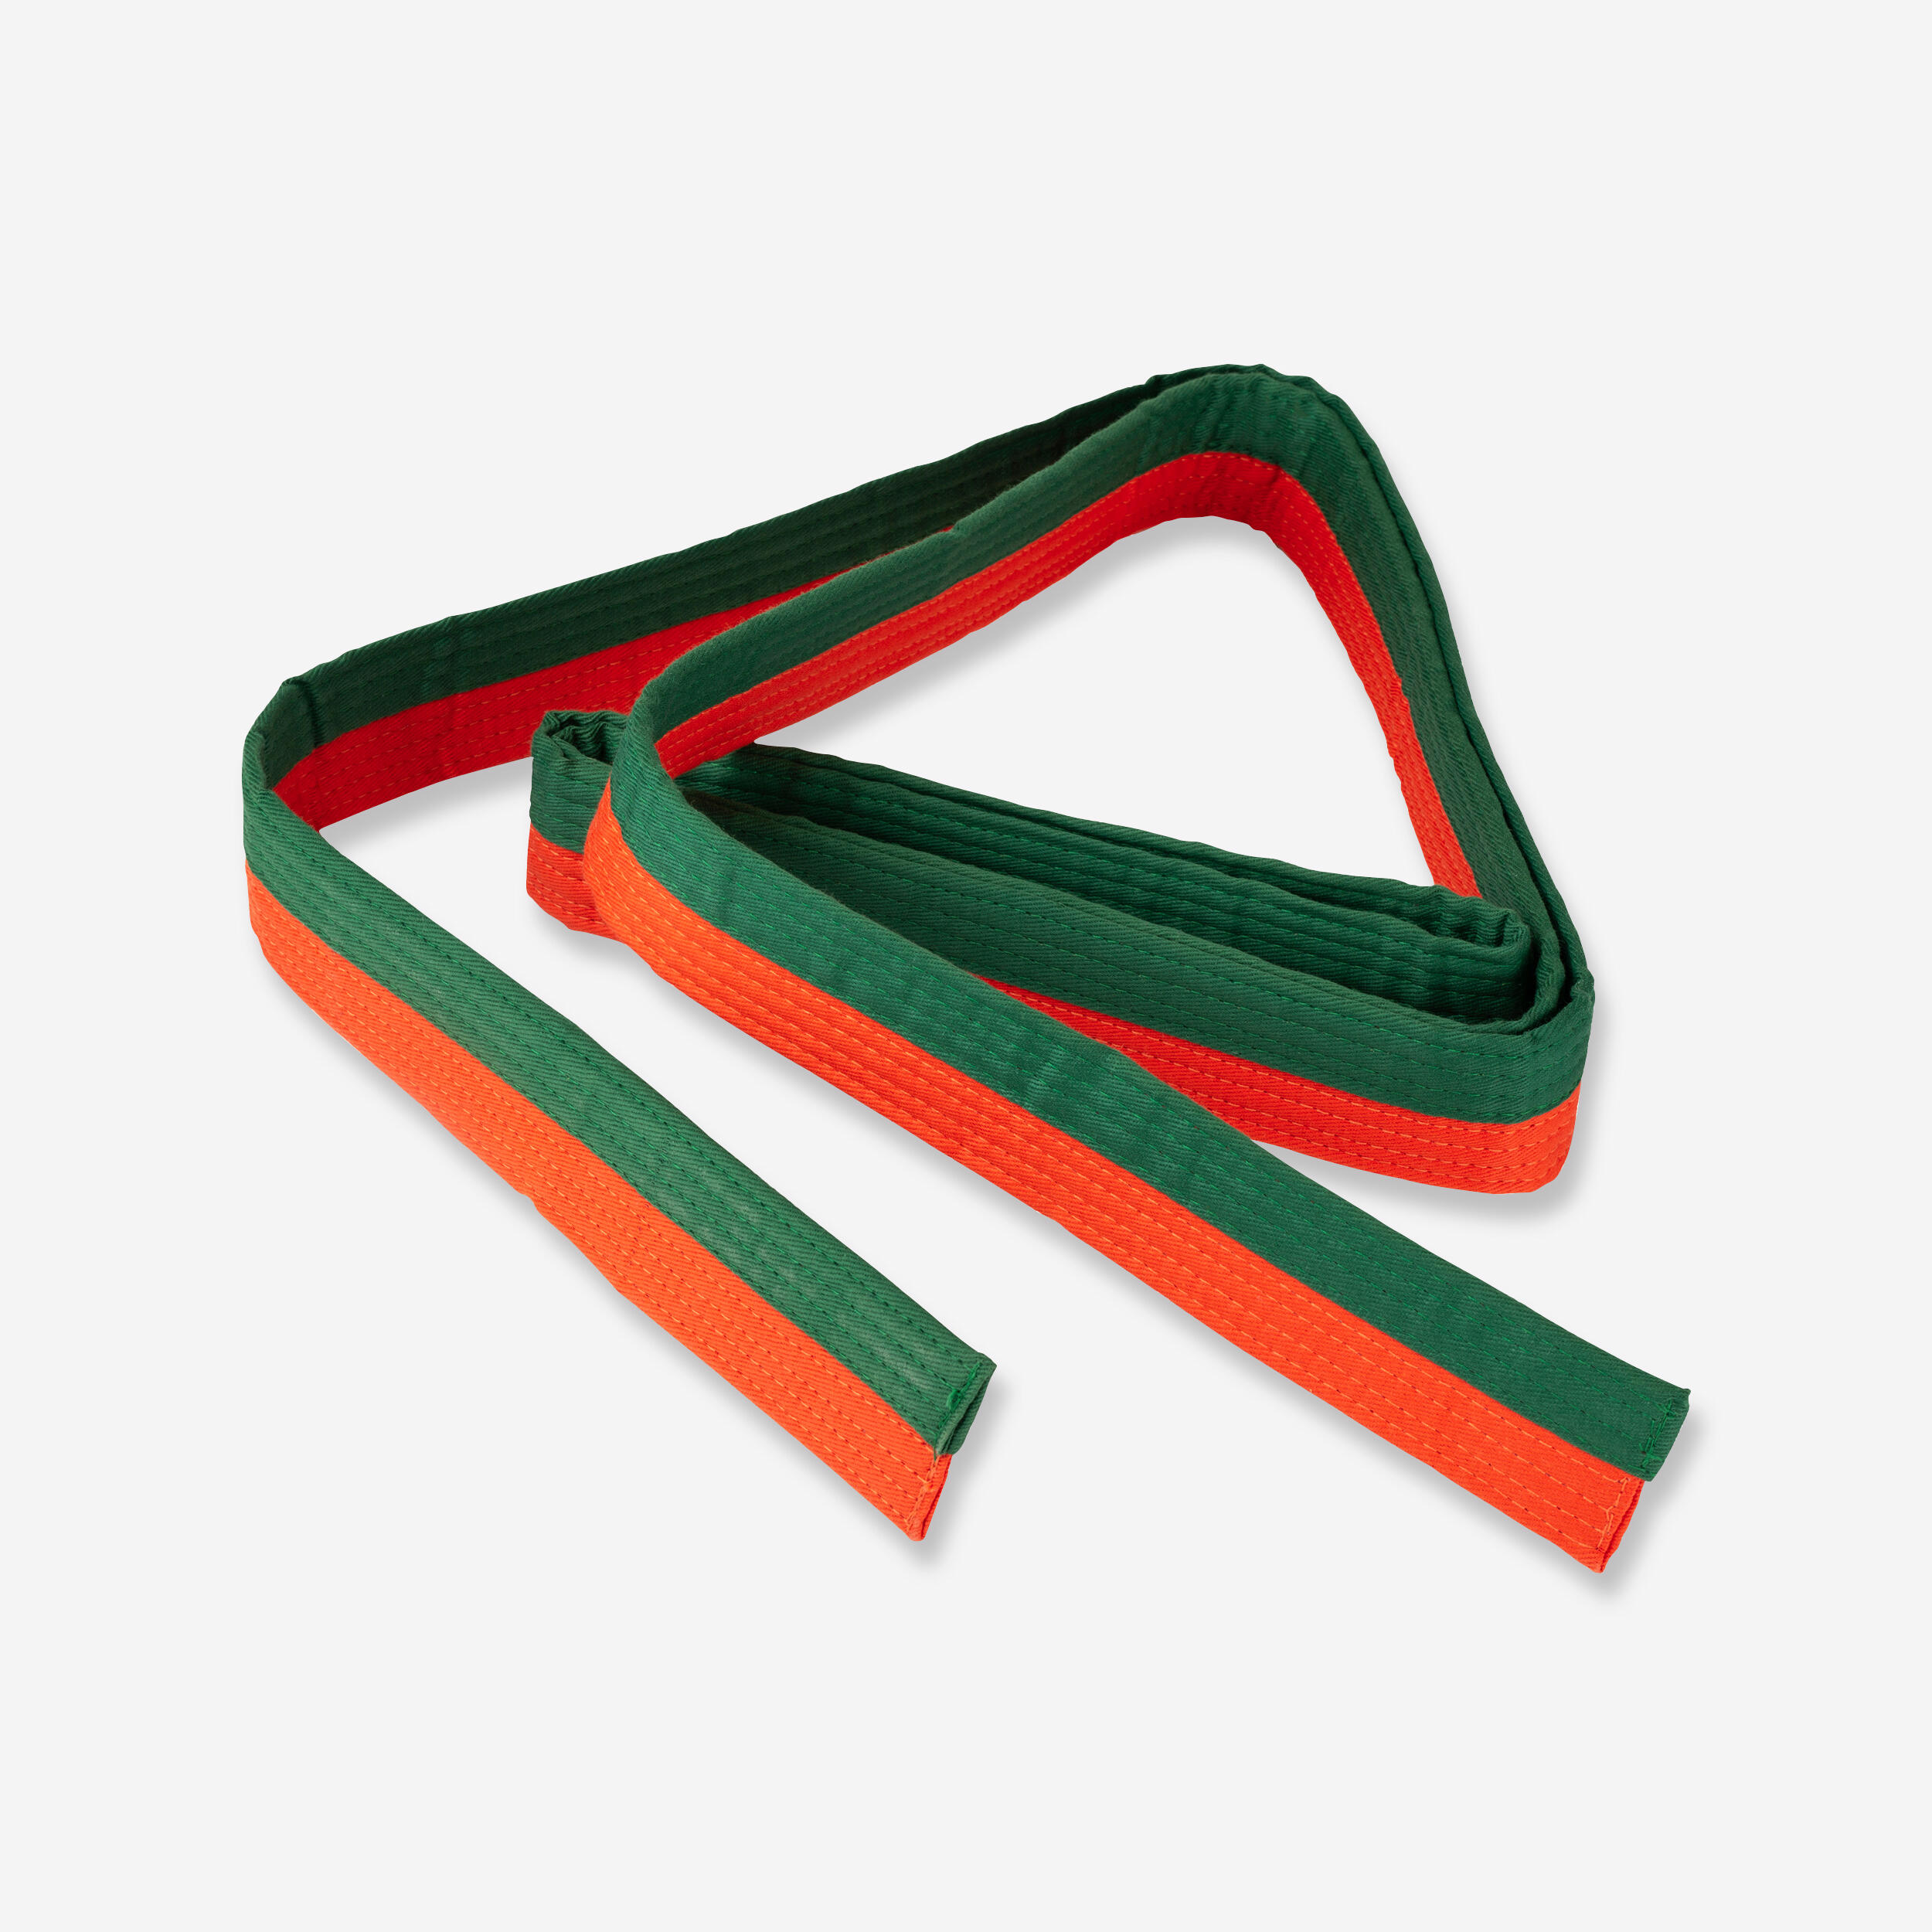 OUTSHOCK 2.5m Piqué Belt - Orange/Green